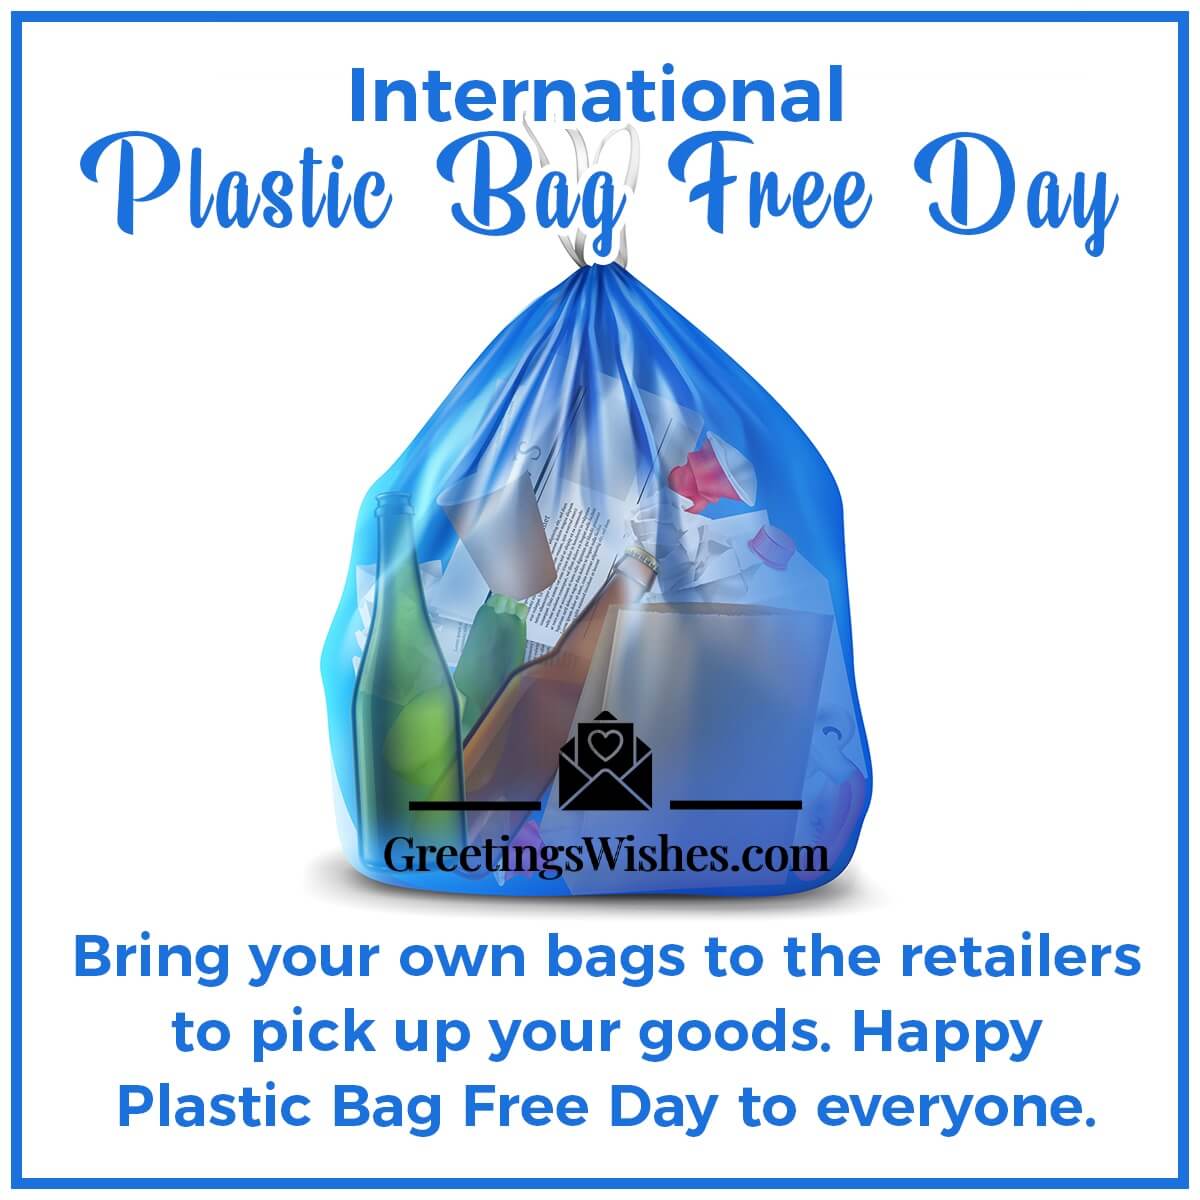 International Plastic Bag Free Day Message